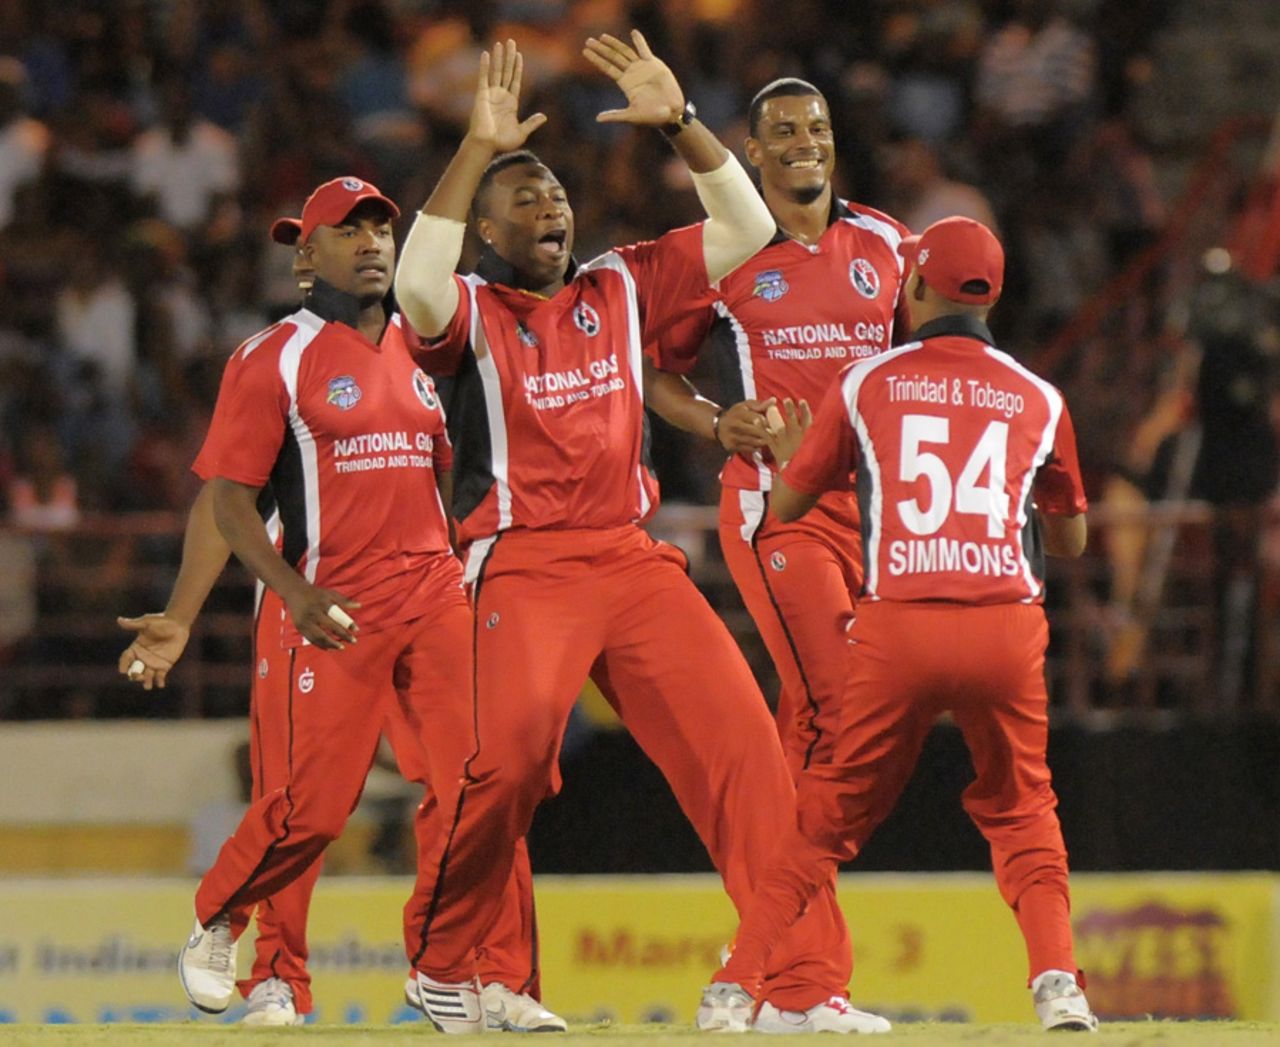 Trinidad & Tobago players celebrate a wicket, Guyana v Trinidad & Tobago, Caribbean T20, final, St Lucia, January 20, 2013